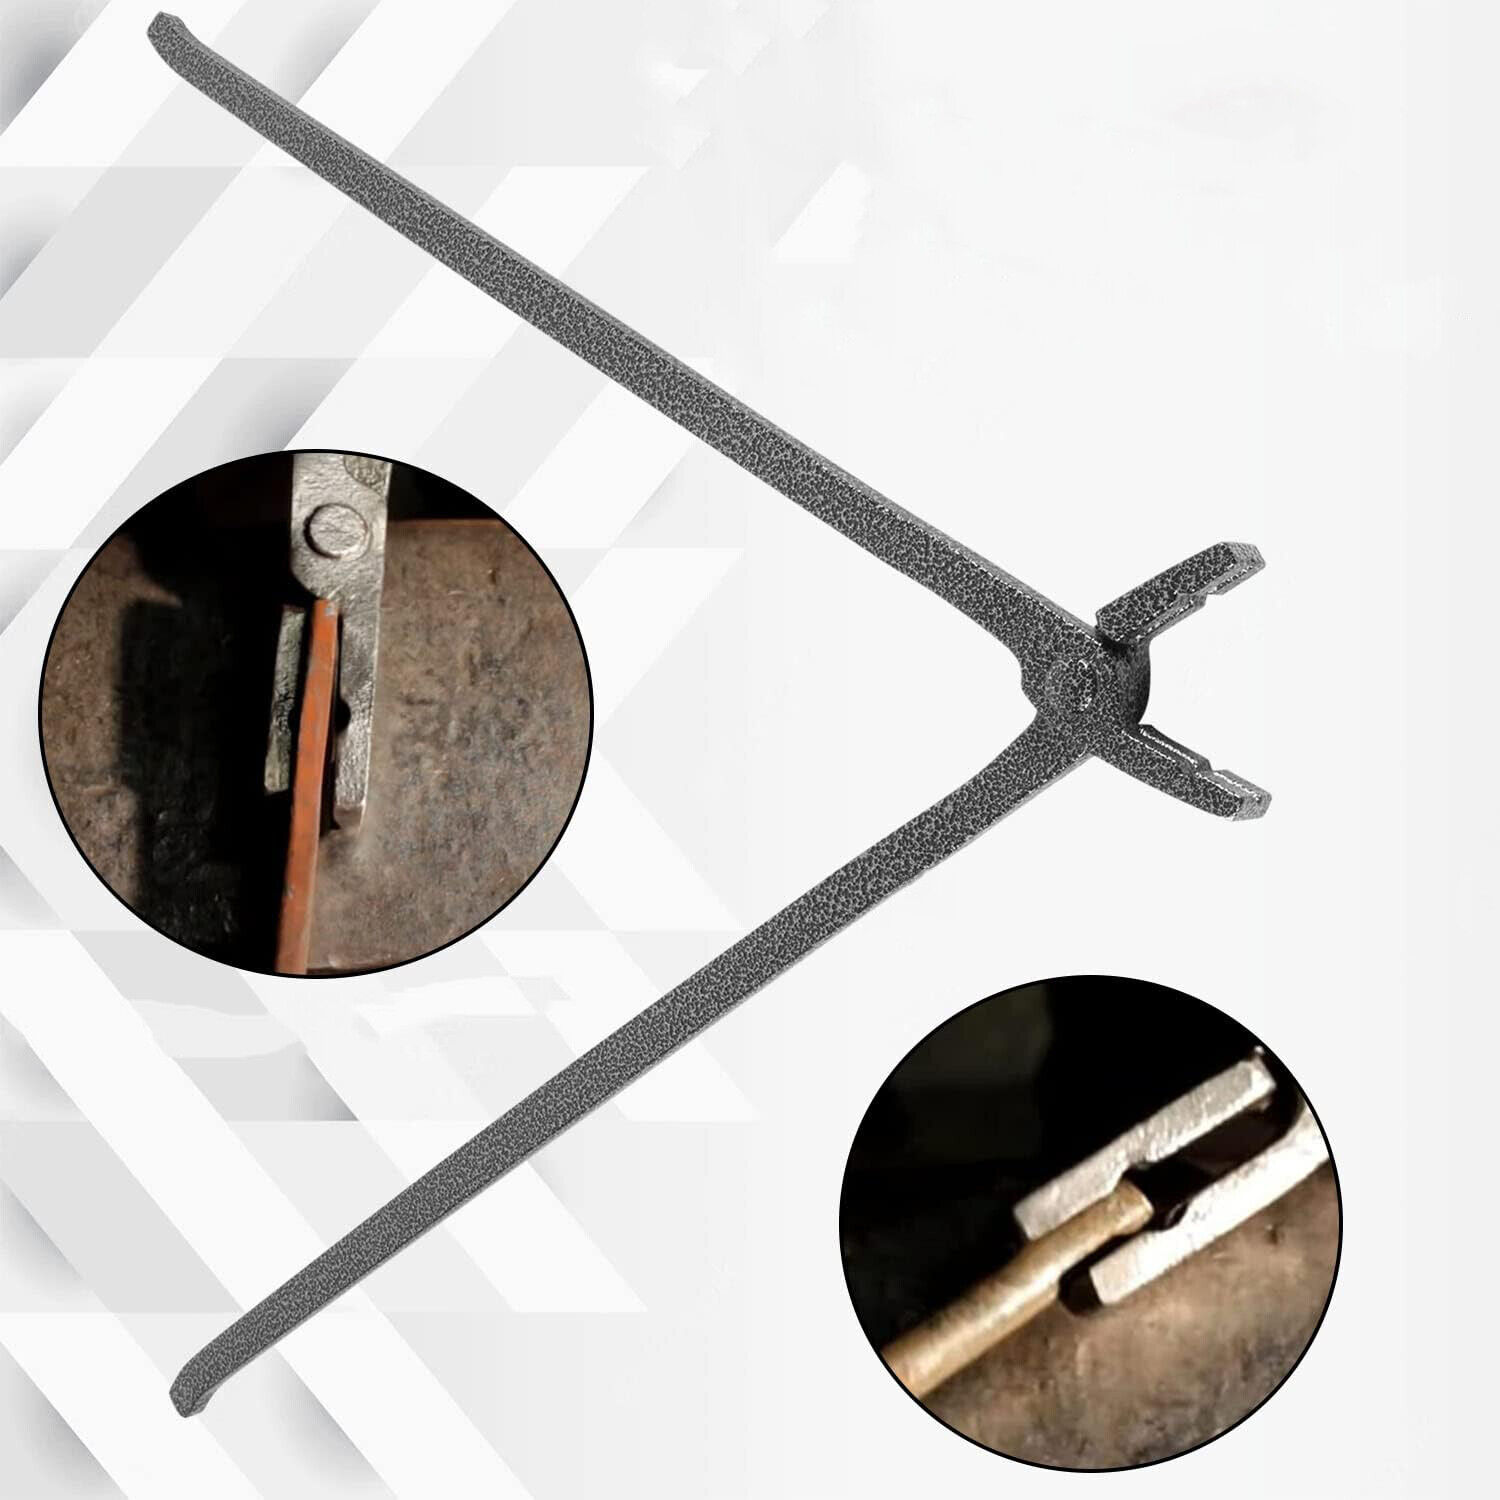 Blacksmith 1/4-inch Flat Jaw Tongs hold 1/4-inch Flat Bar, Square bar, Round bar